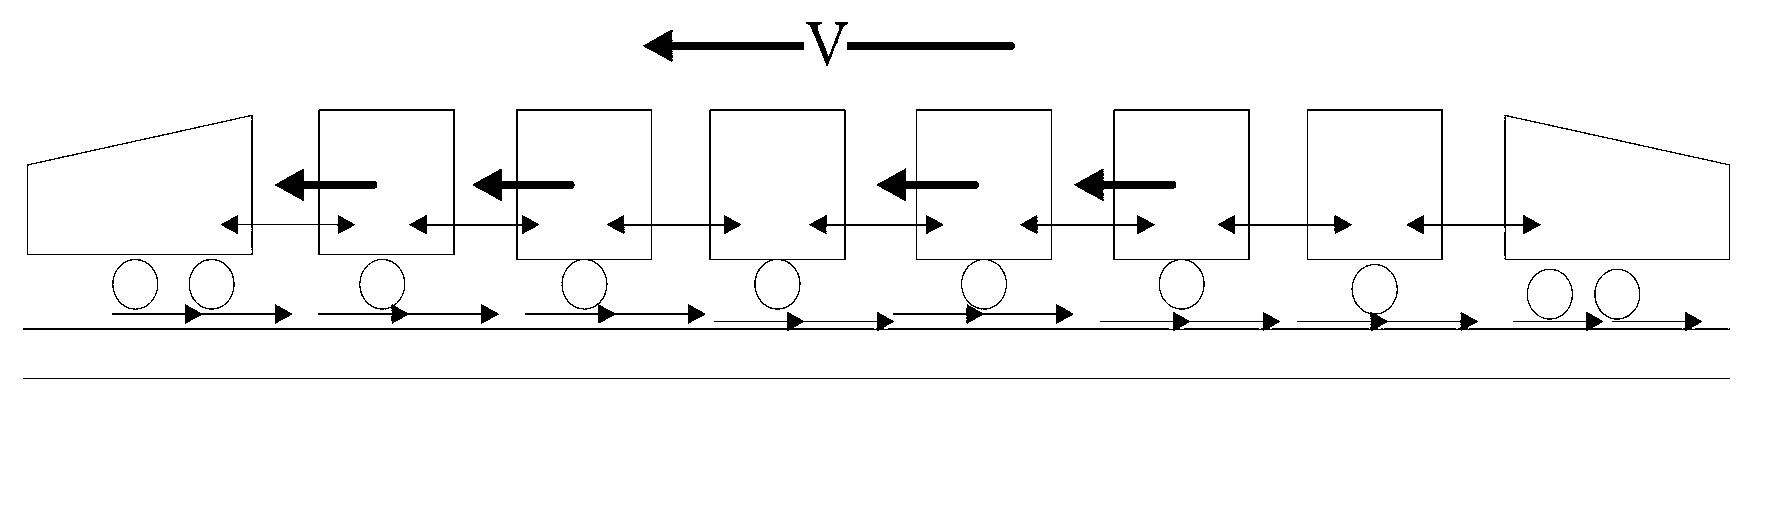 Power distribution optimized scheduling method of motor train neighborhood sub-system